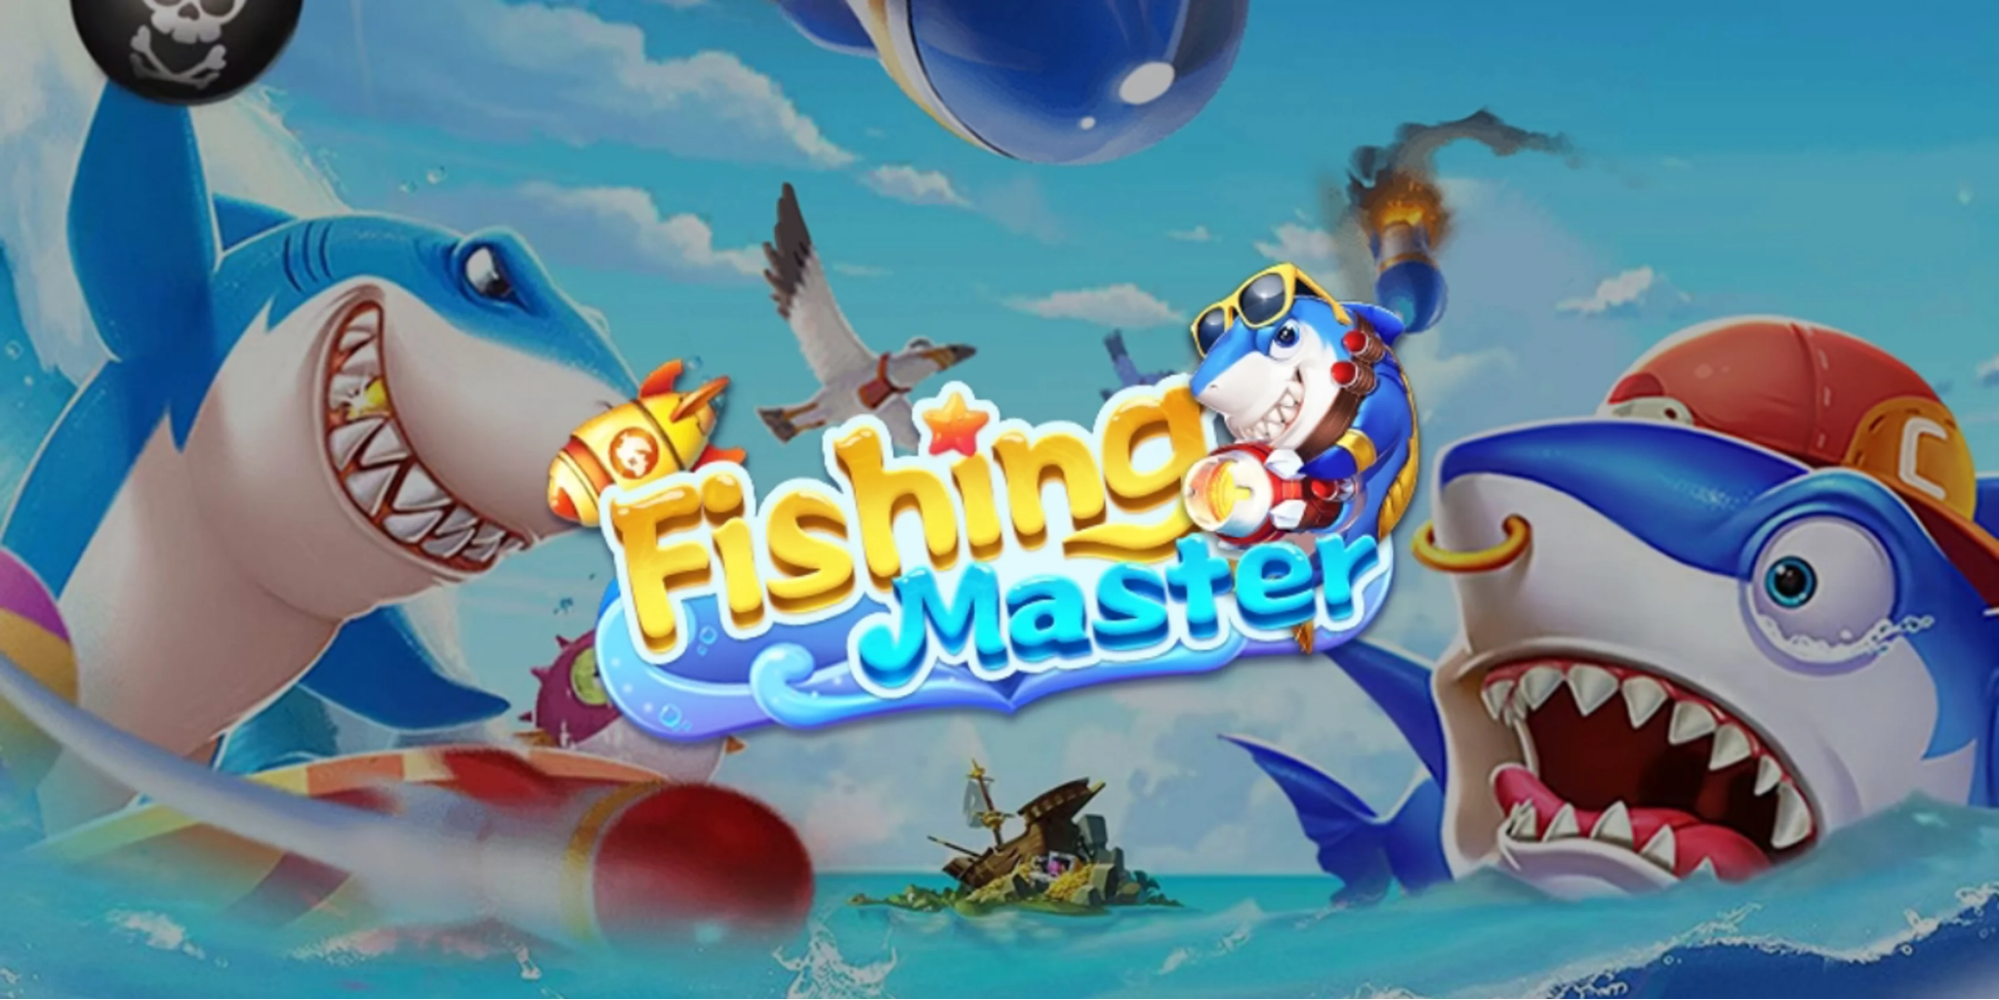 Thu-suc-voi-game-Vua-cau-ca-Fishing-master